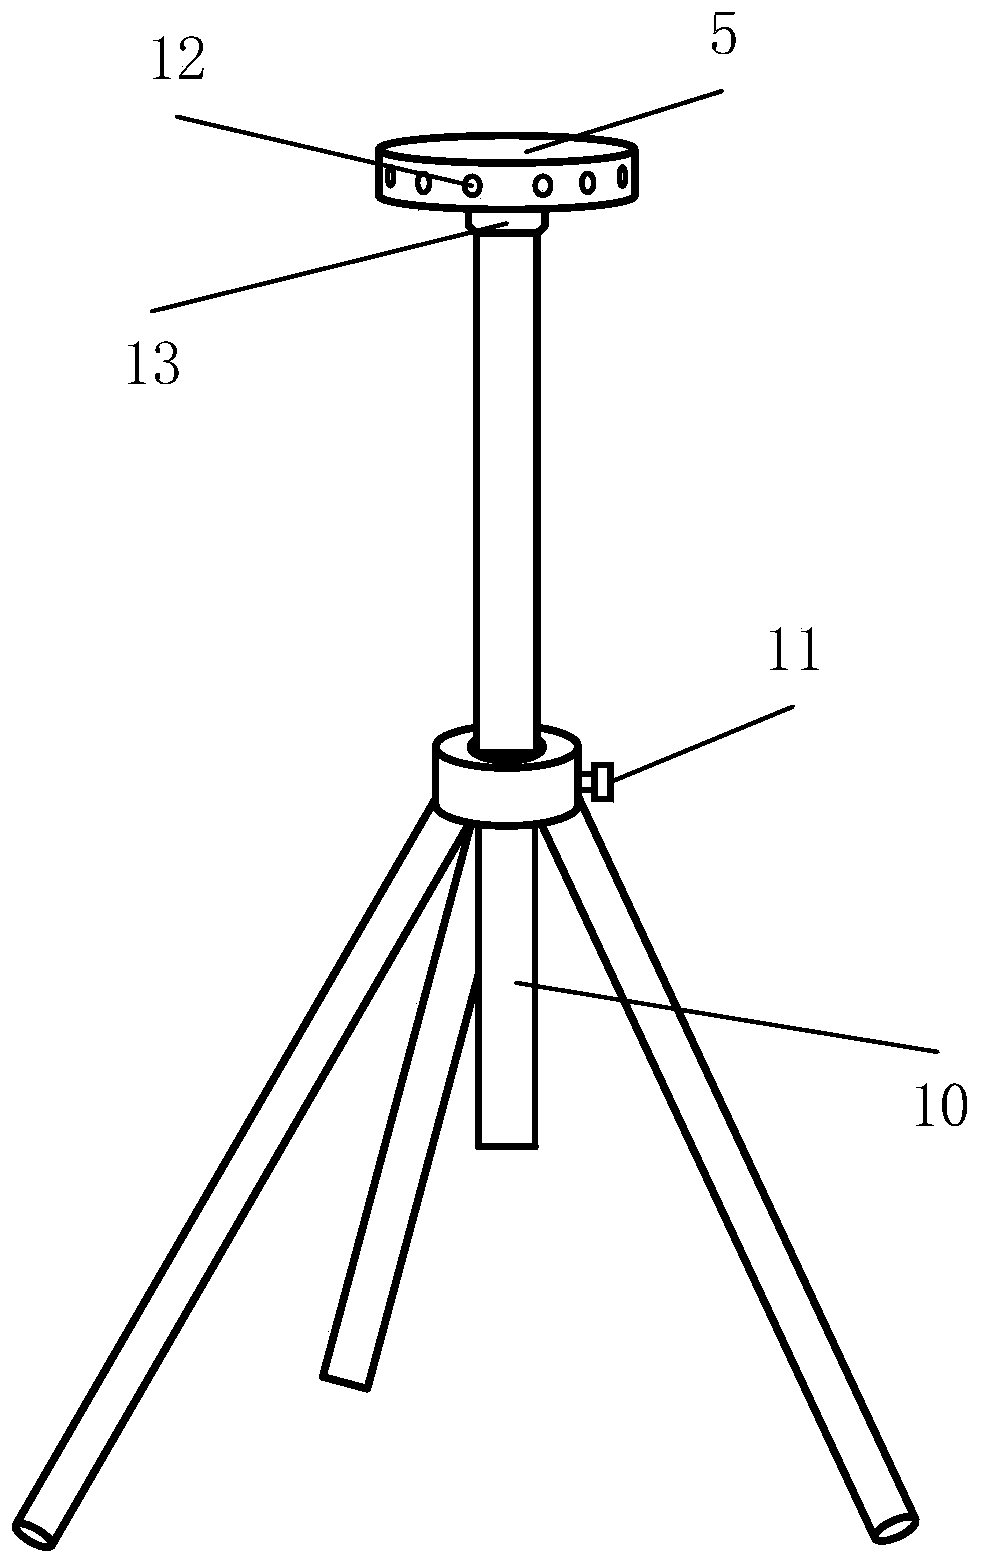 Automobile minimum turning diameter measuring system based on LD ranging and method